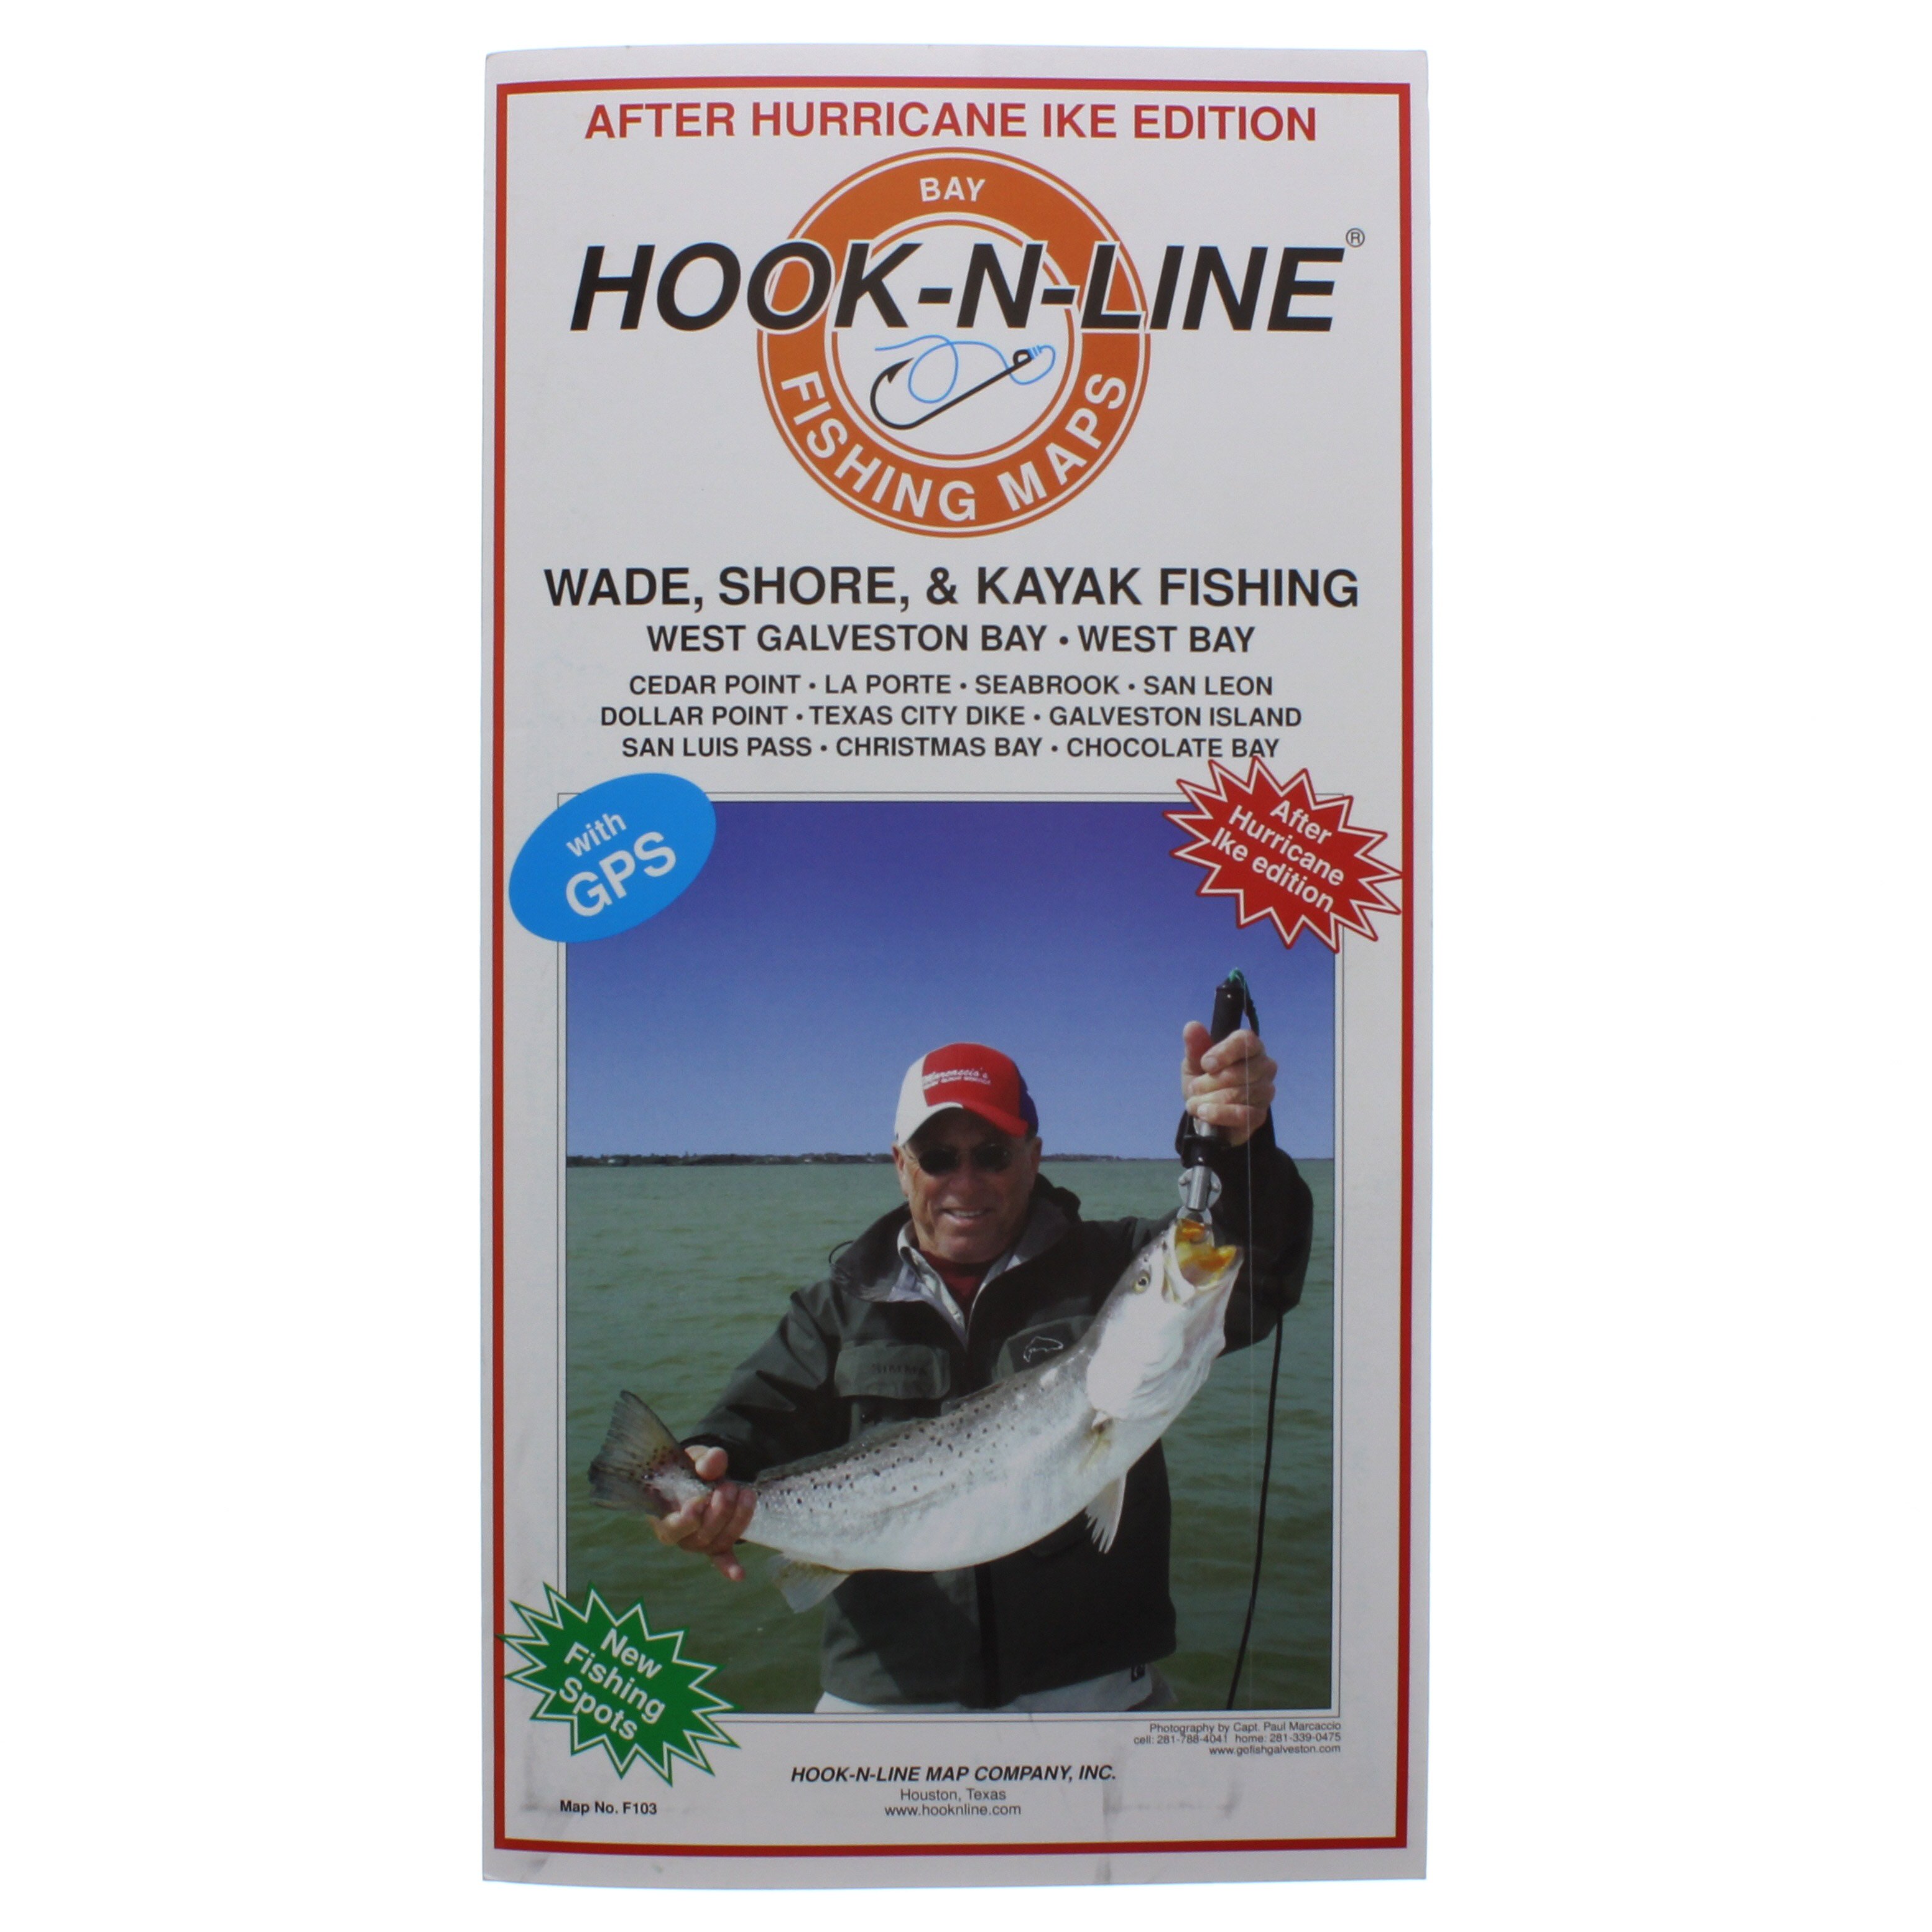 Hook-N-Line Wade Shore,& Kayak Fishing West Galveston Bay